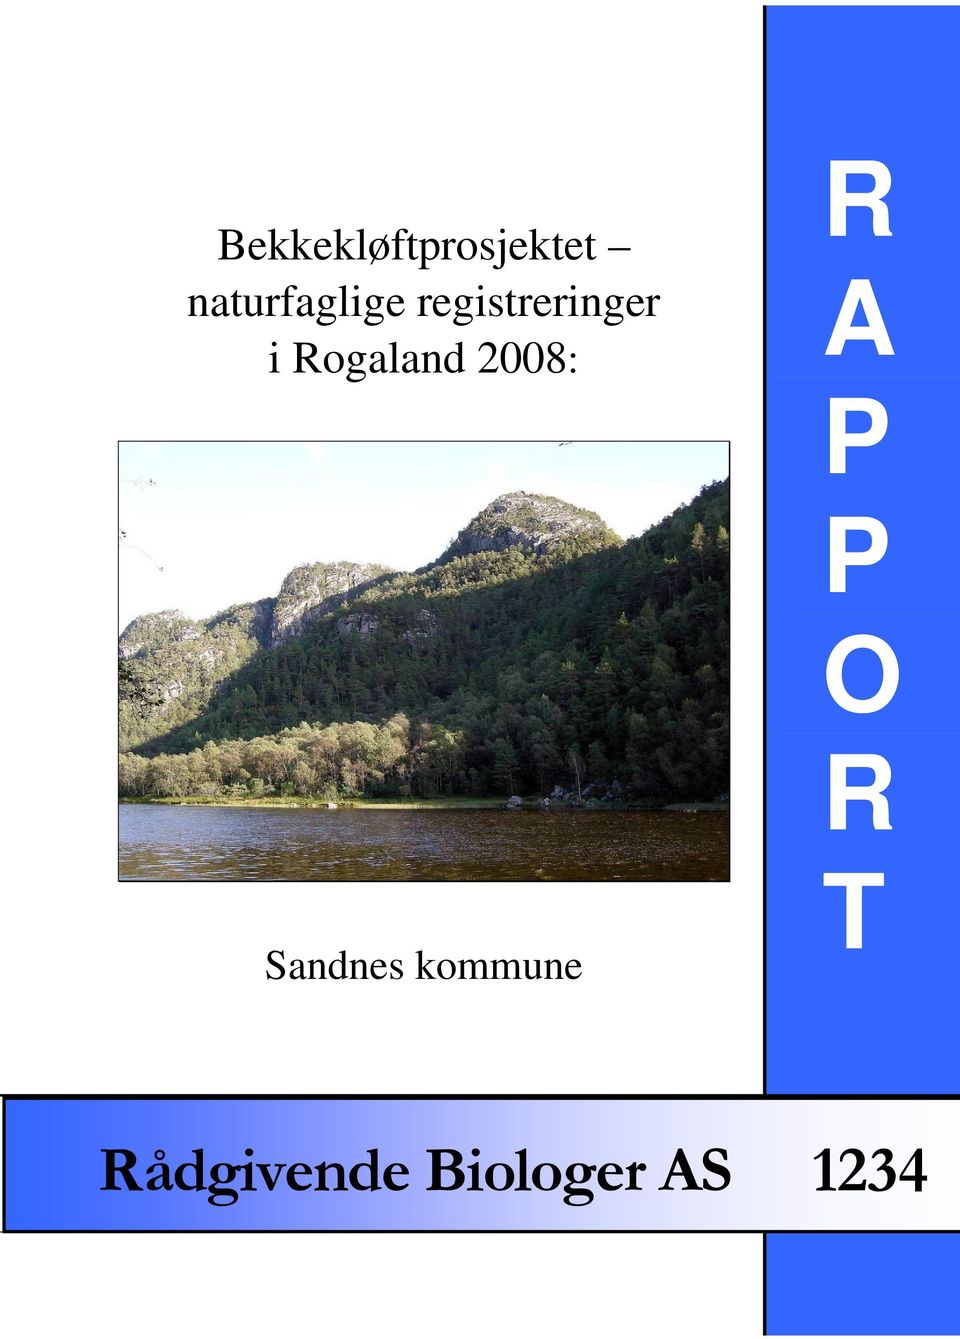 Rogaland 2008: R A P P O R